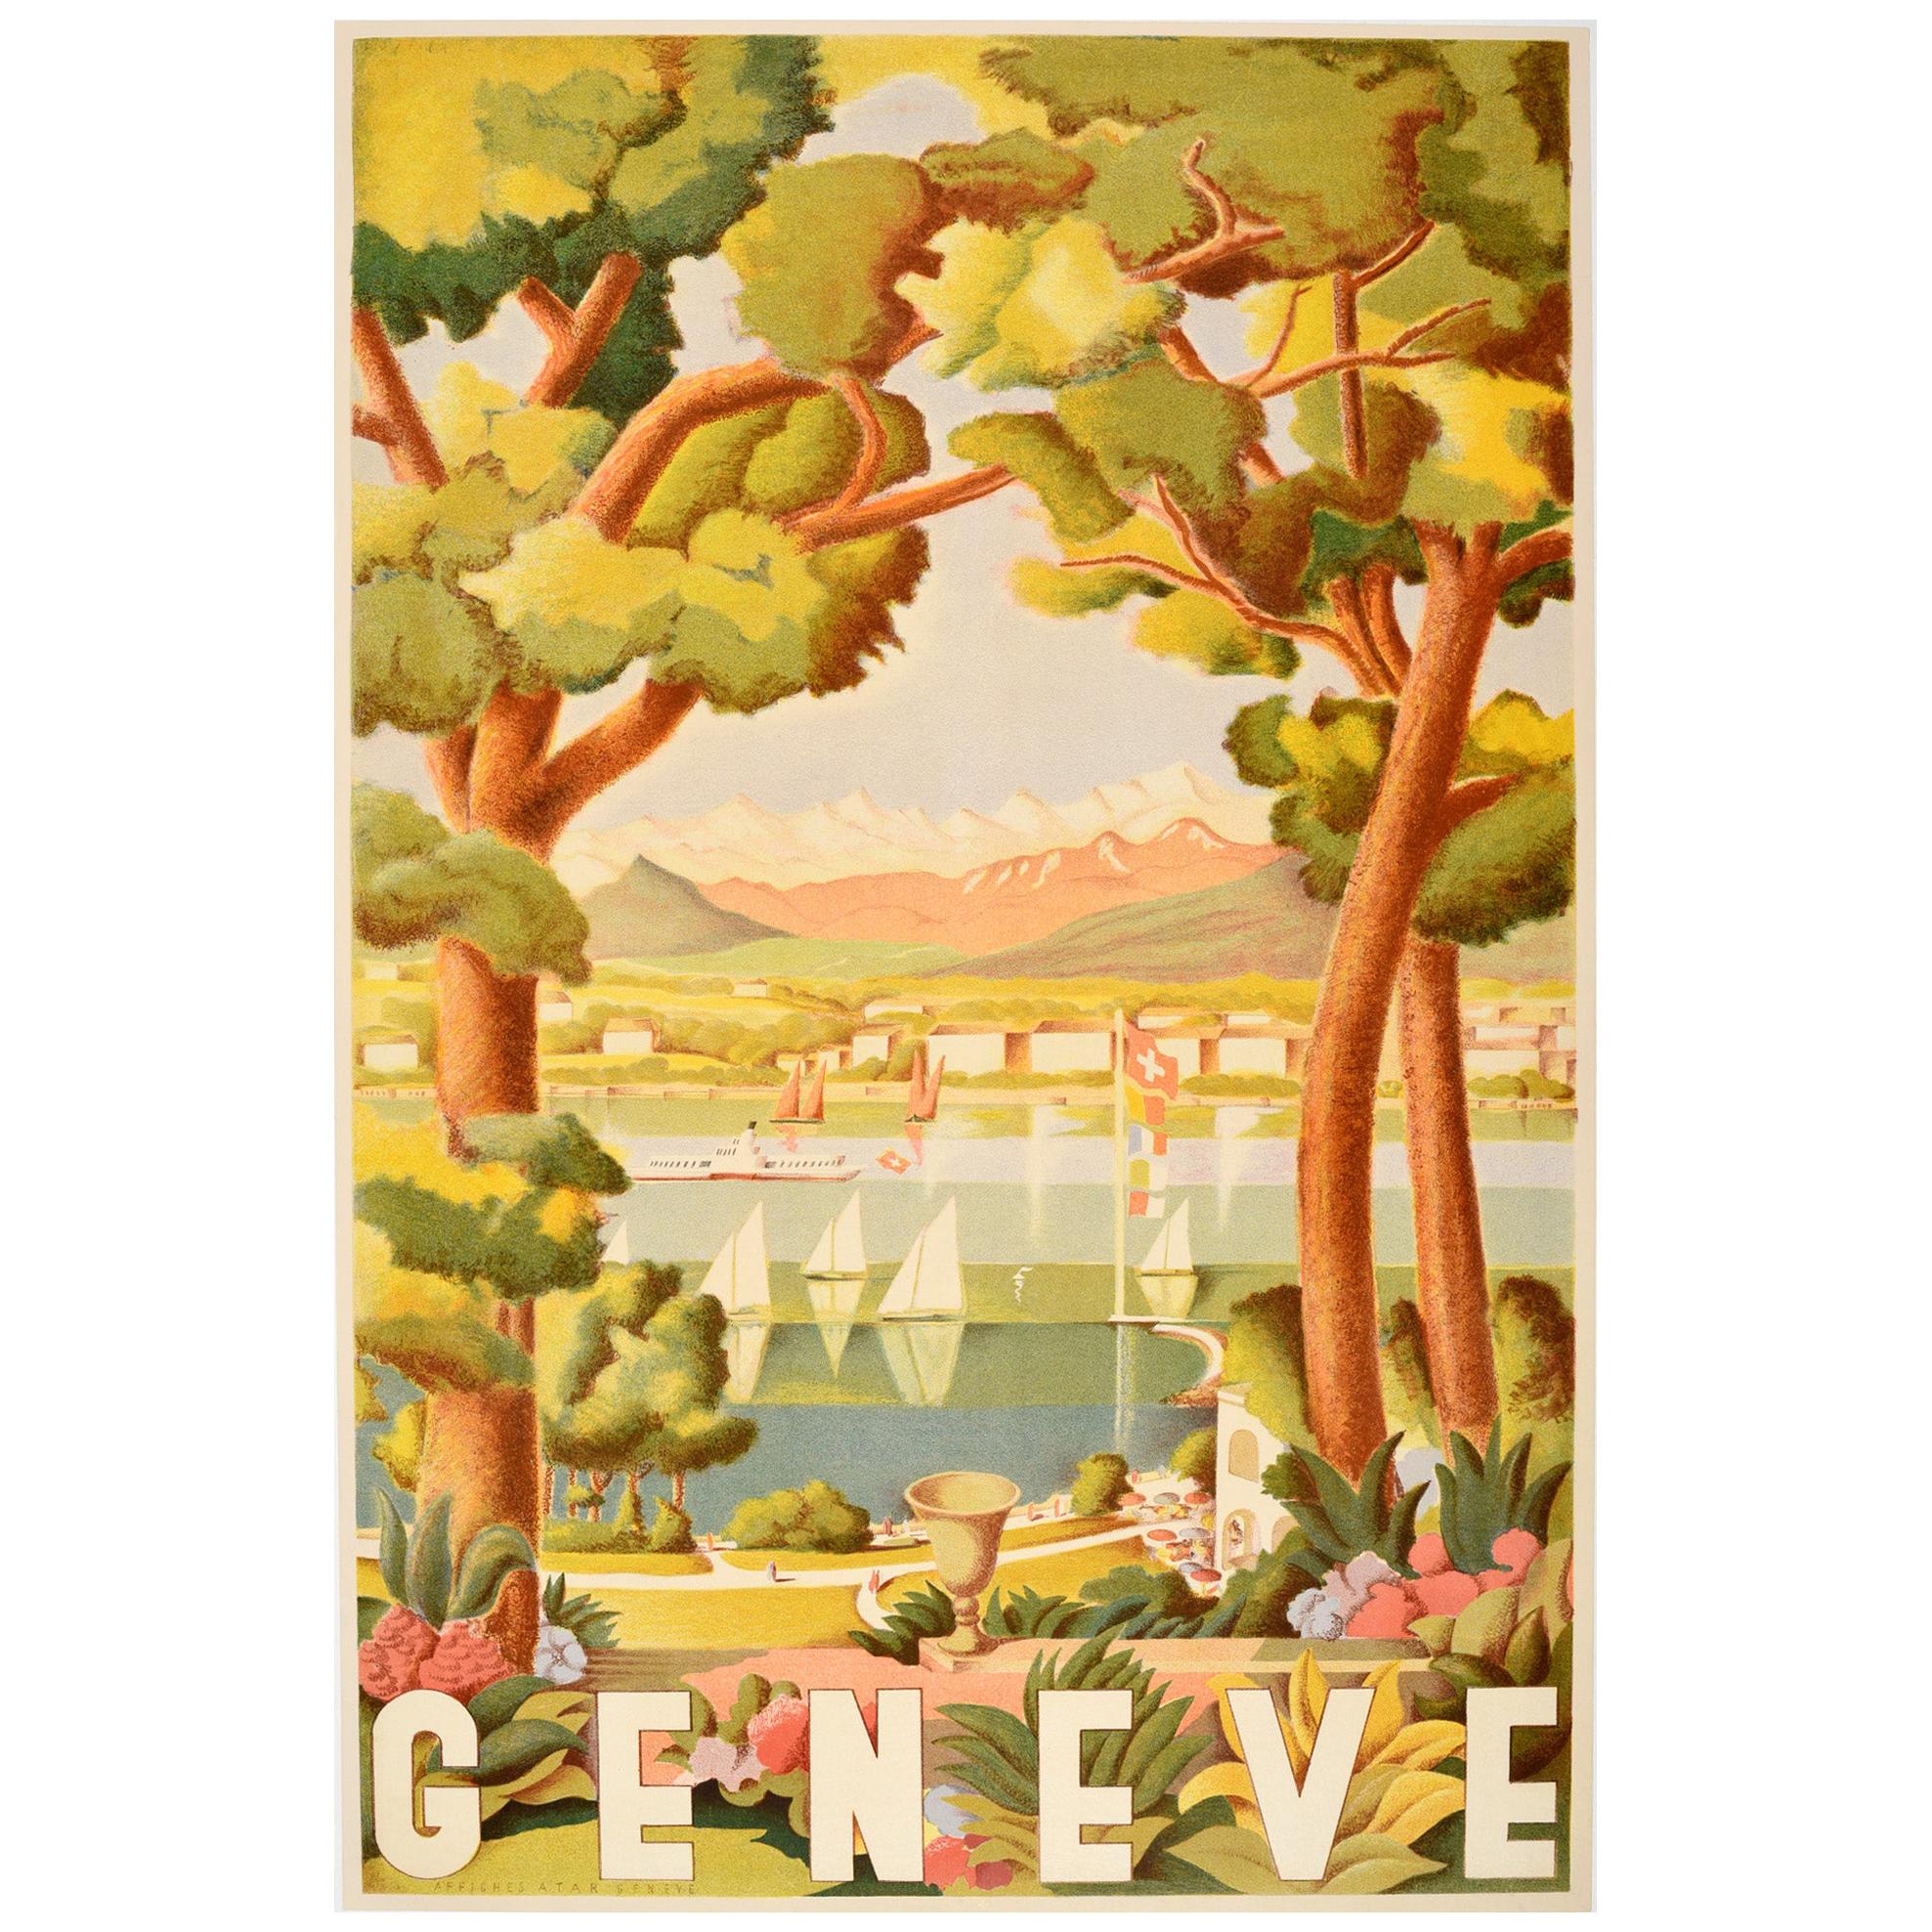 Original Vintage Swiss Travel Poster Geneve Lake Geneva Switzerland Sailing Alps